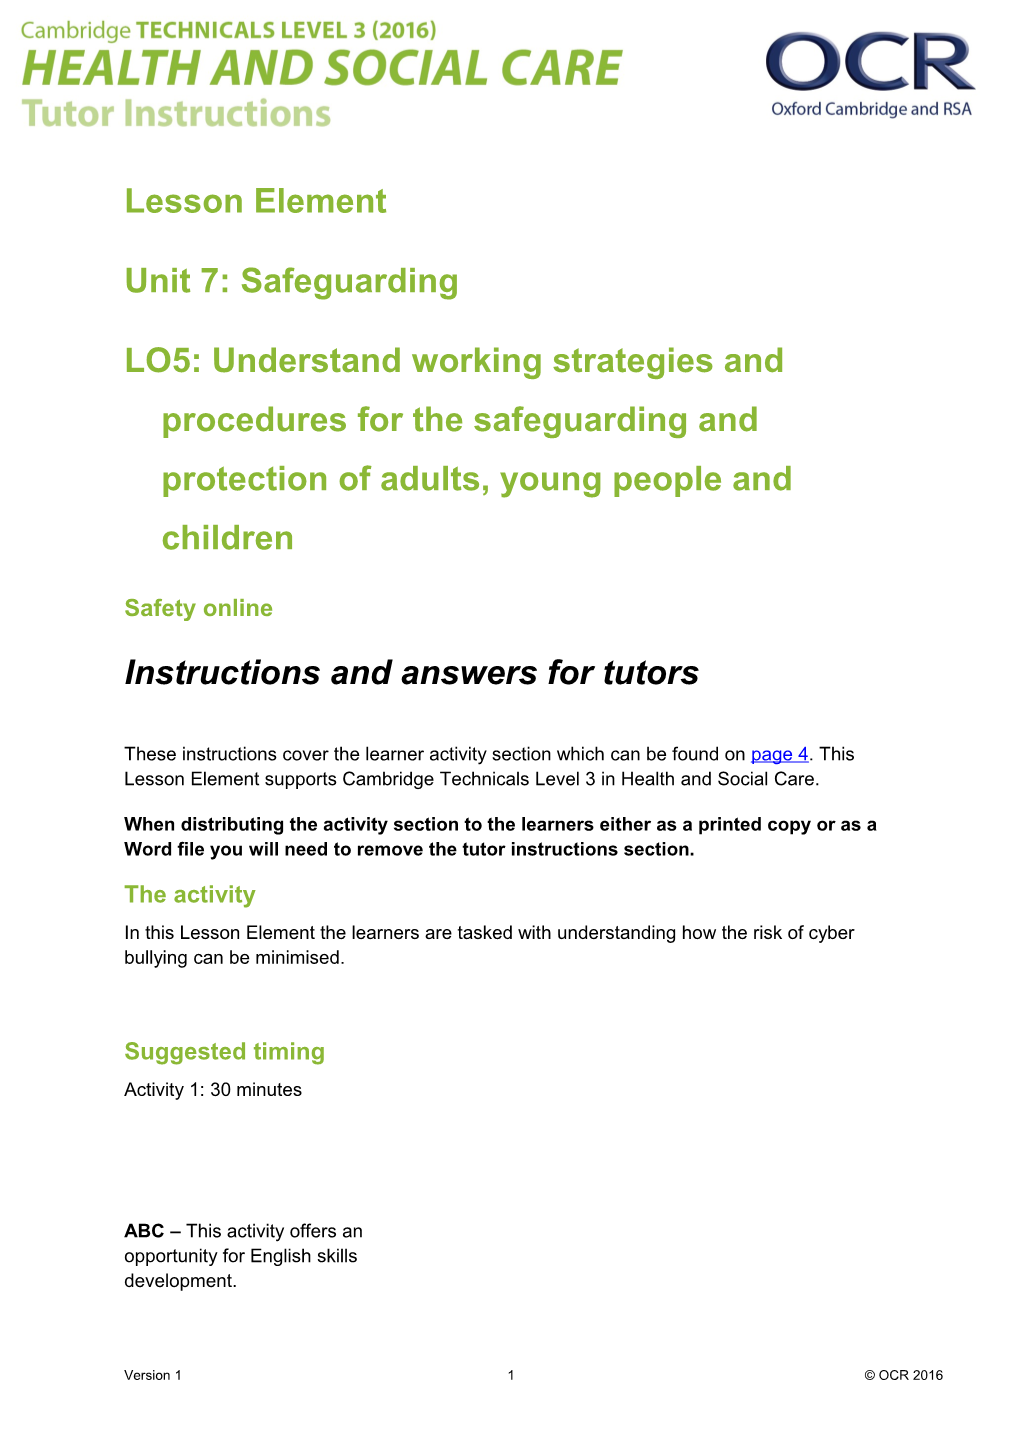 Cambridge Technicals Level 3 Health and Social Care U07 Lesson Element 1